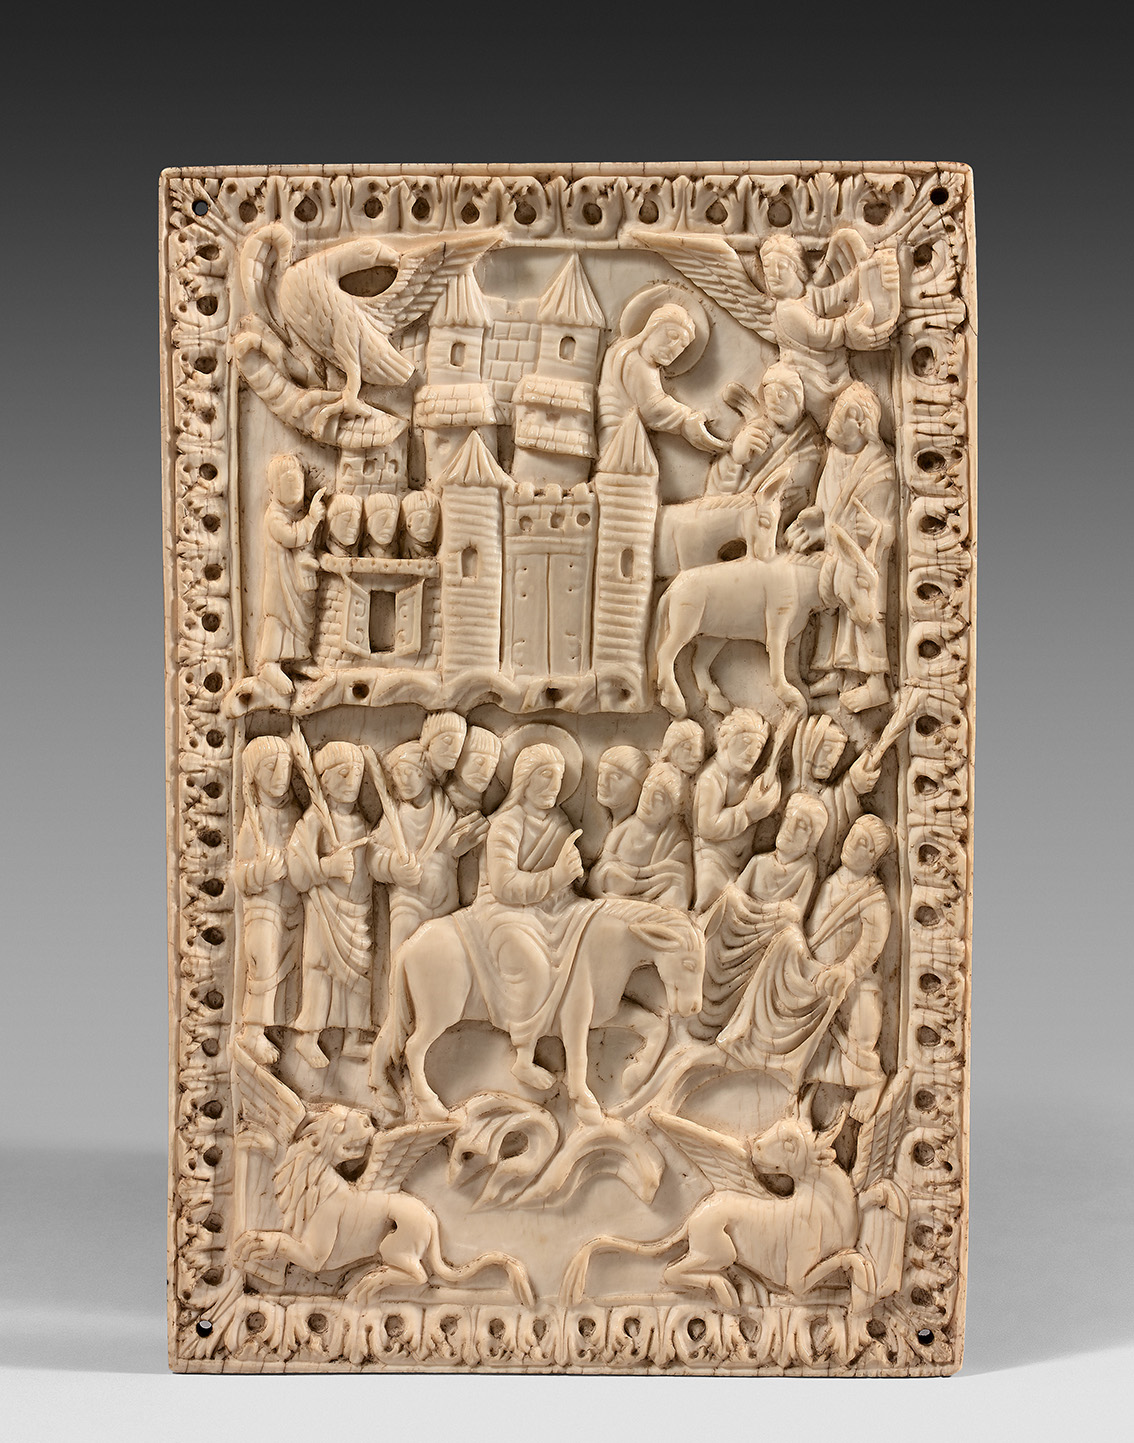 An Ivory from the Carolingian Renaissance